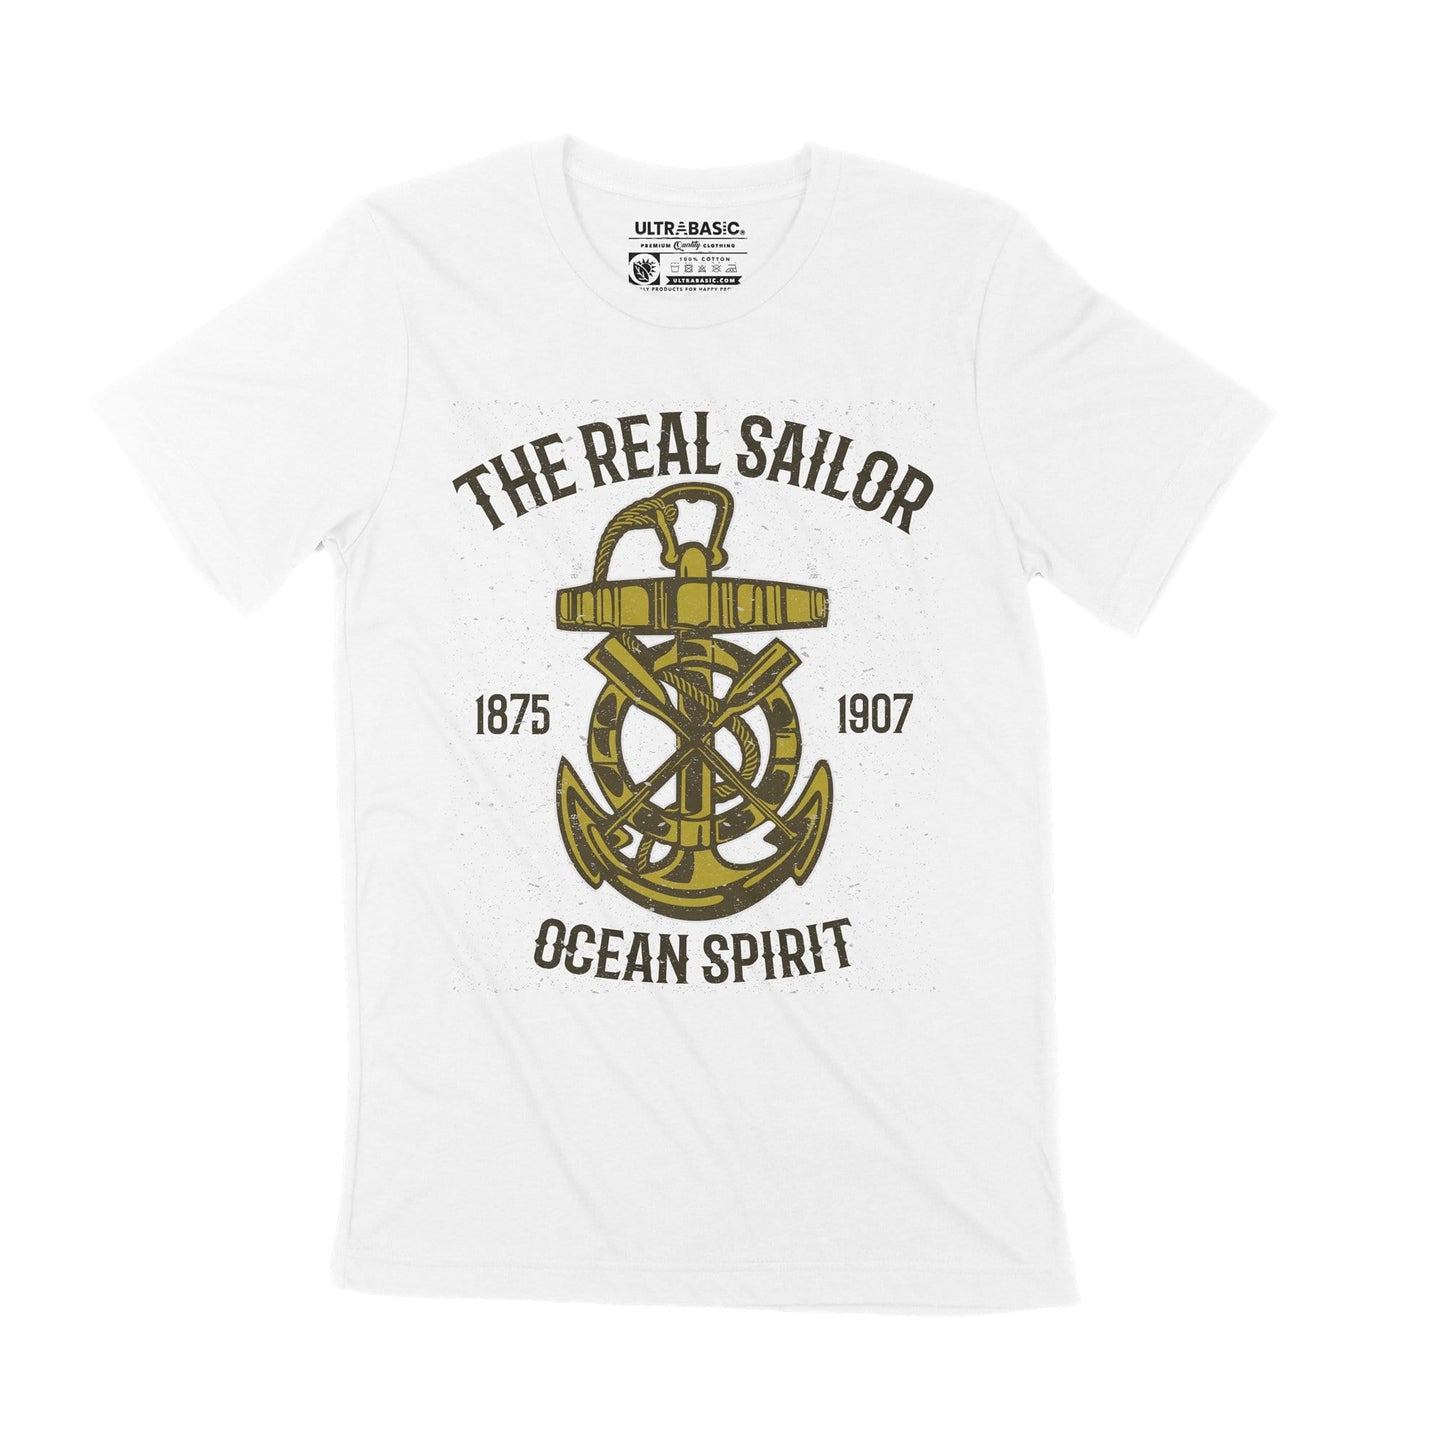 ULTRABASIC Men's Graphic T-Shirt The Real Sailor - Ocean Spirit Anchor Tee Shirt